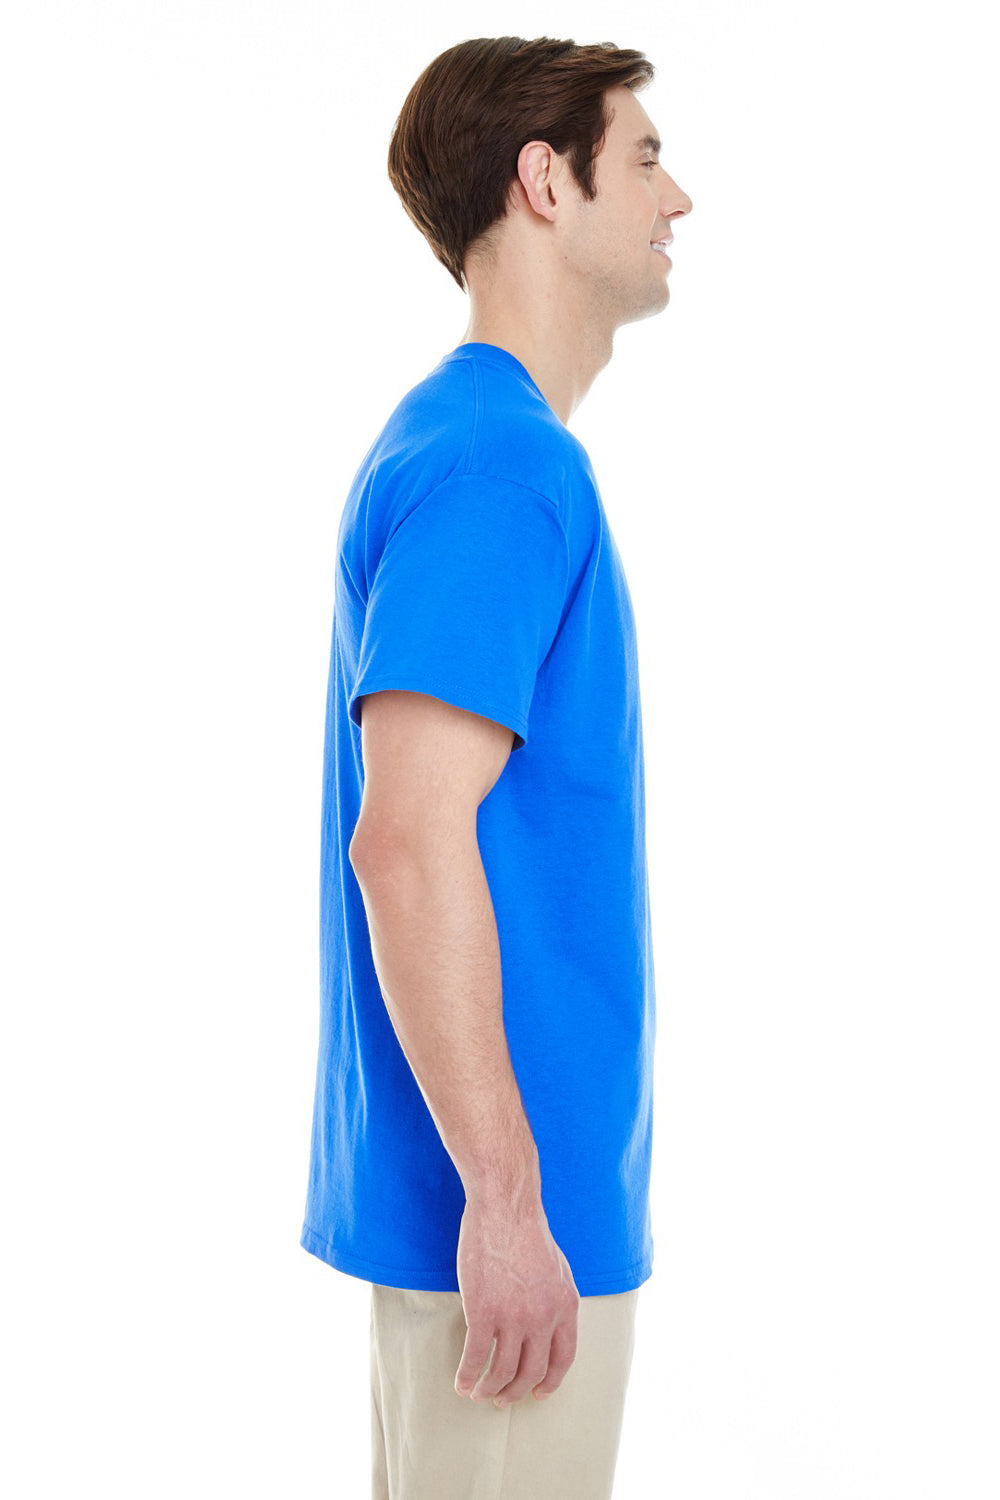 Gildan G530 Mens Short Sleeve Crewneck T-Shirt w/ Pocket Royal Blue Side